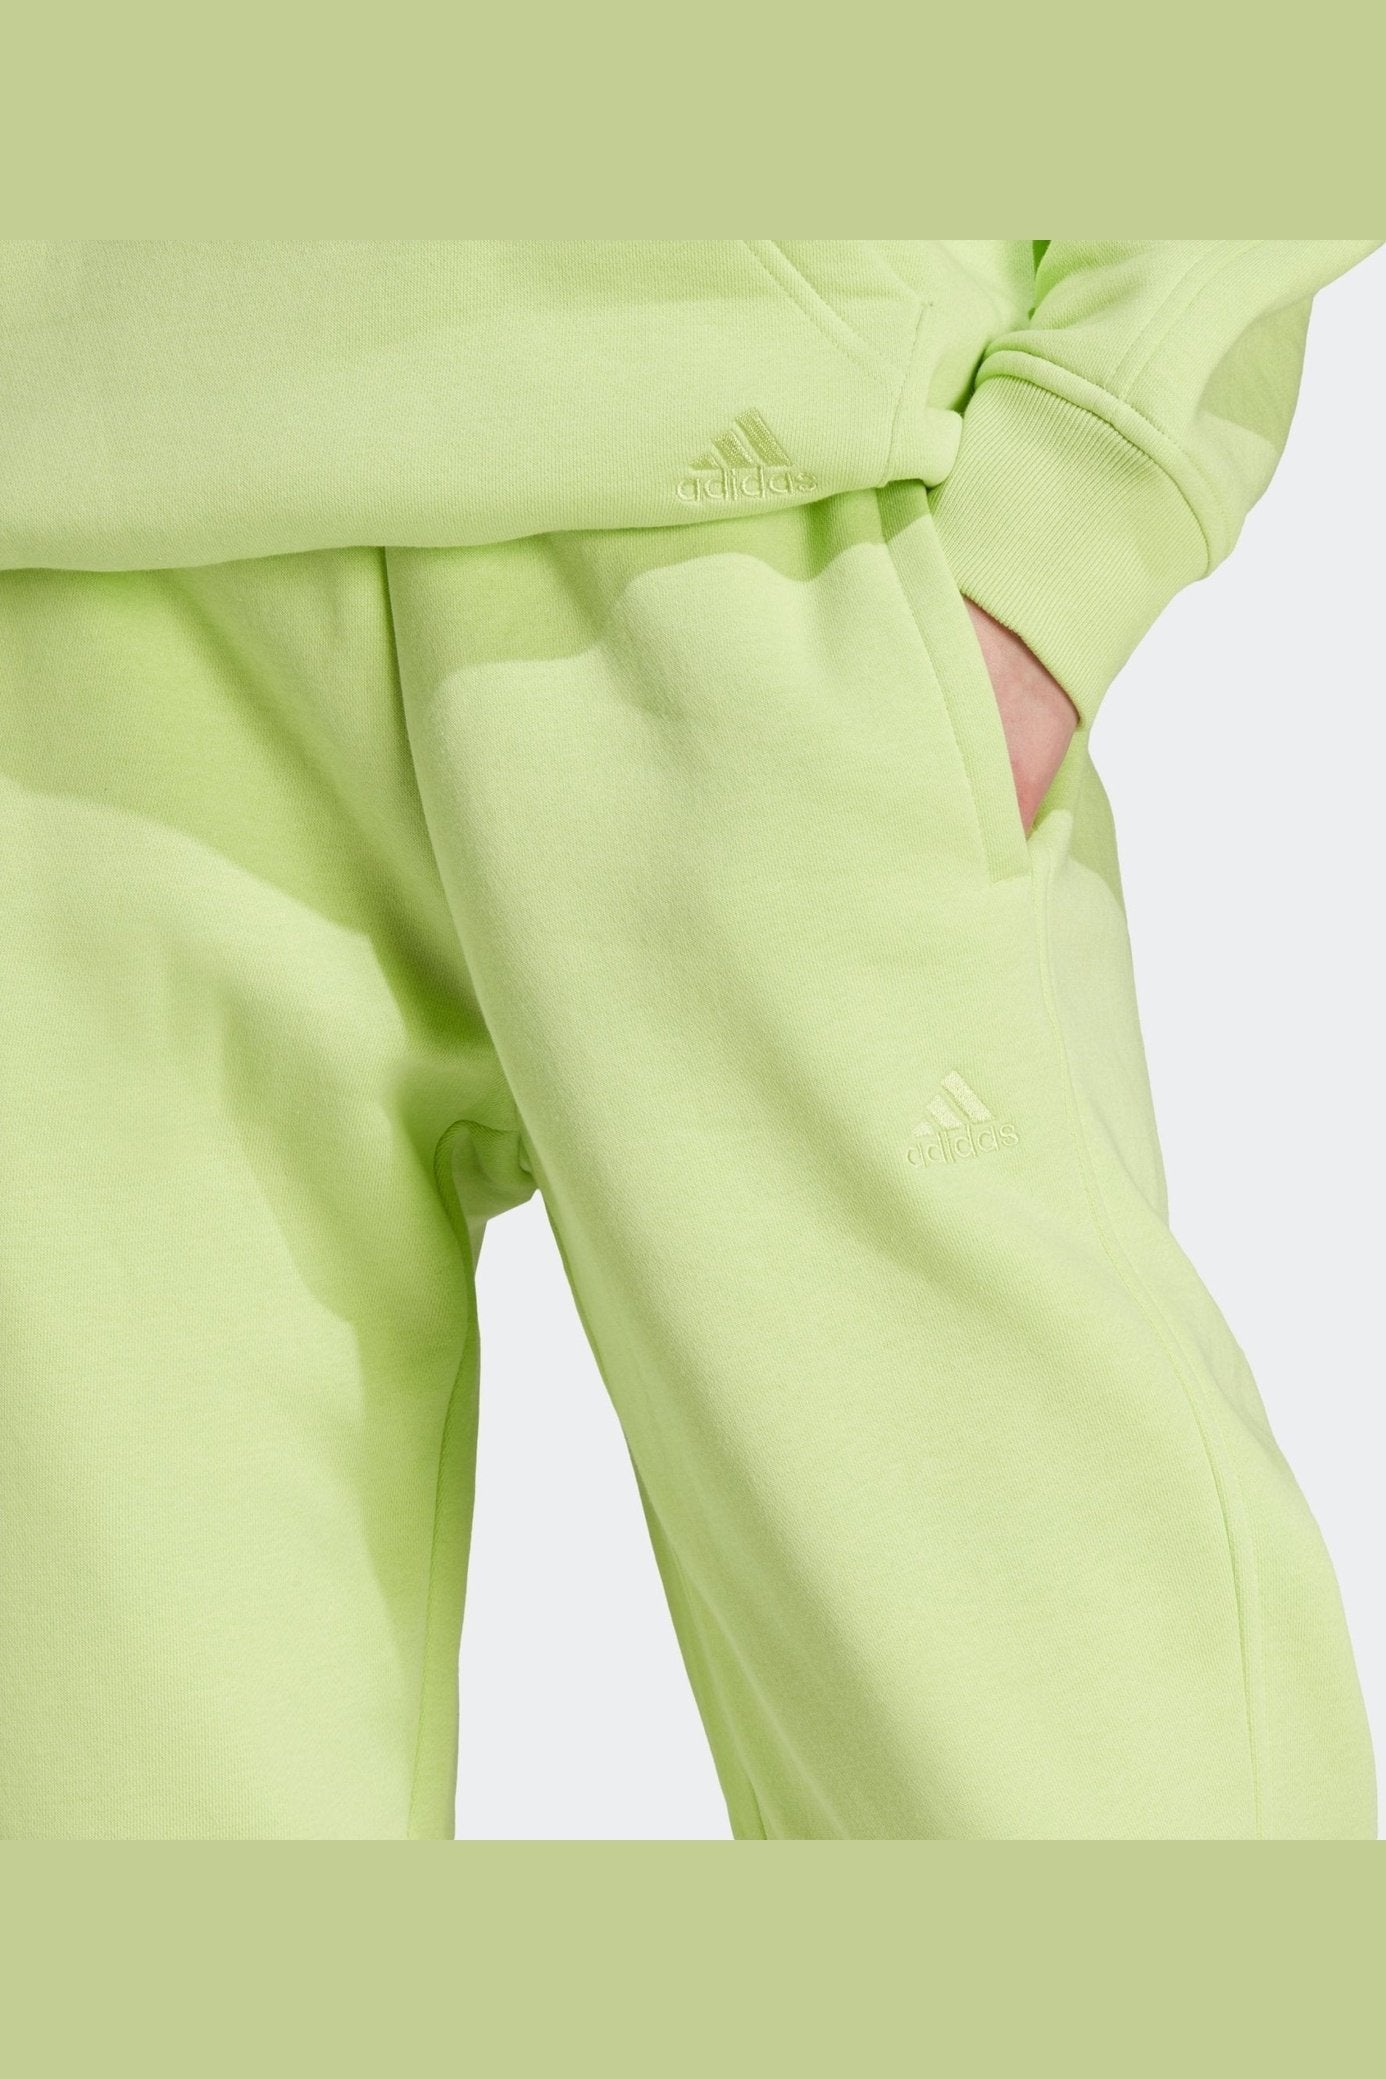 ADIDAS - מכנסיים ארוכים לנשים ALL SZN בצבע ירוק זוהר - MASHBIR//365